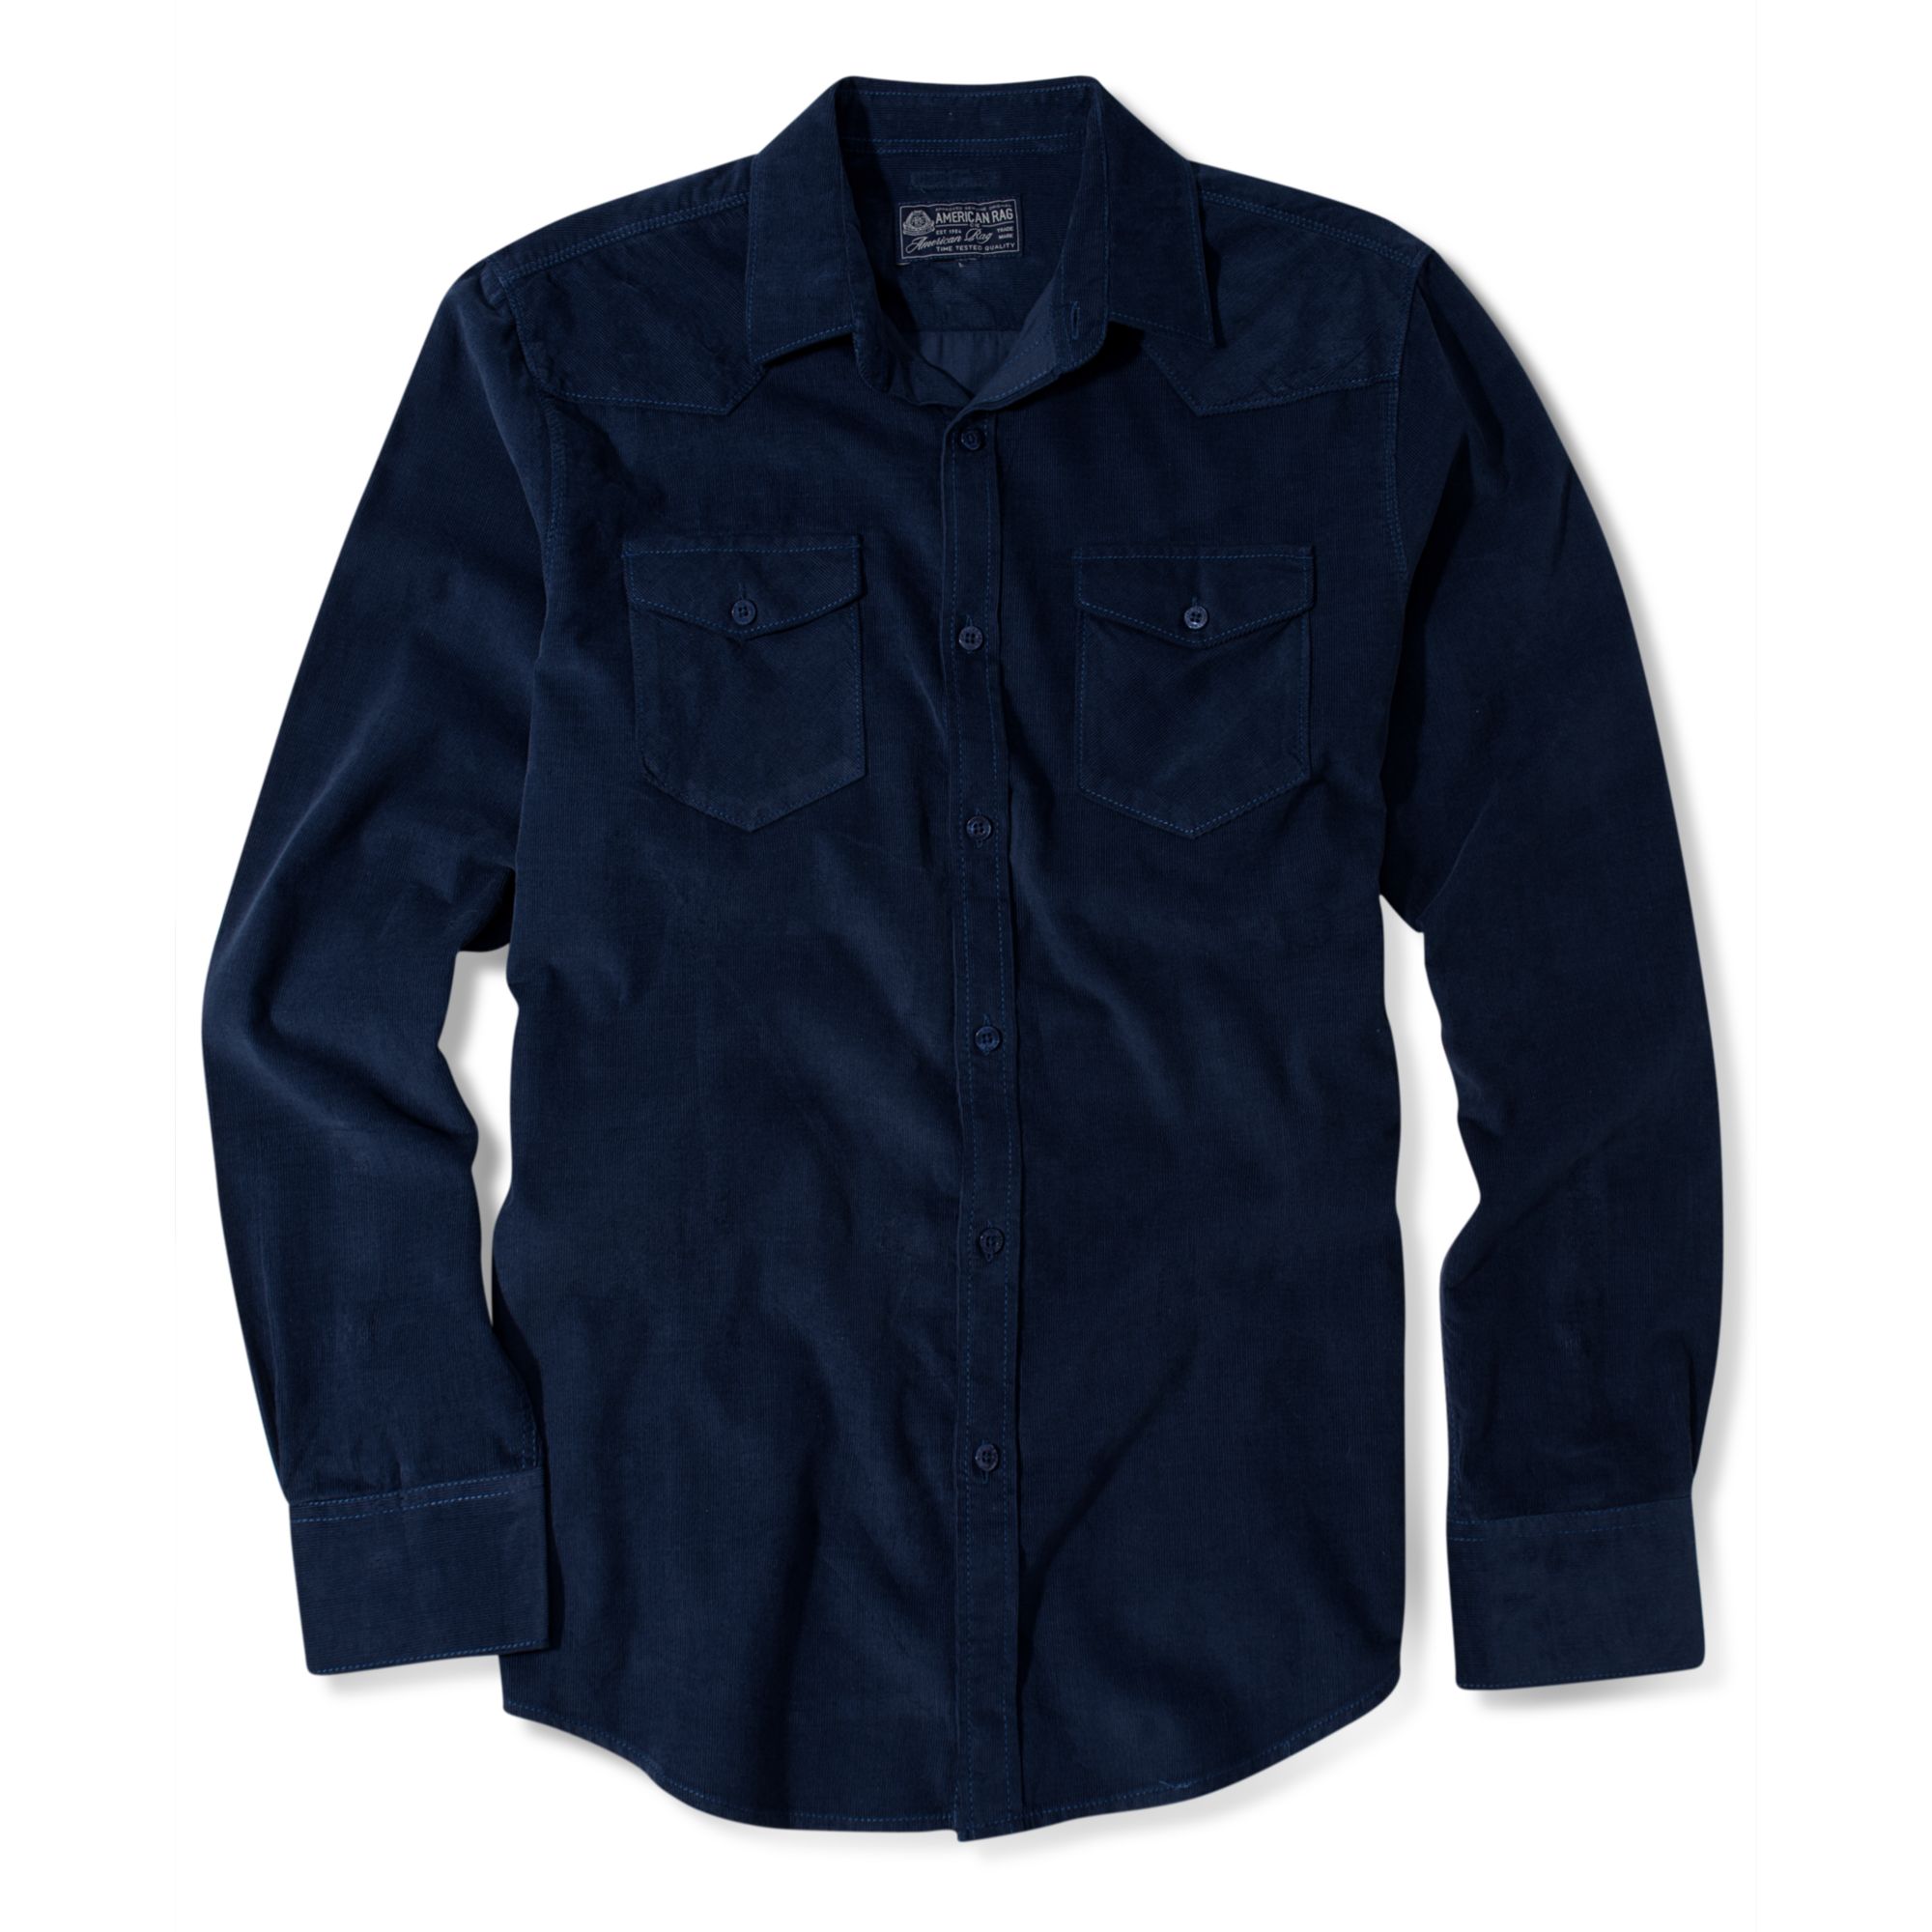 Lyst - American Rag Western Corduroy Long Sleeve Shirt in Blue for Men